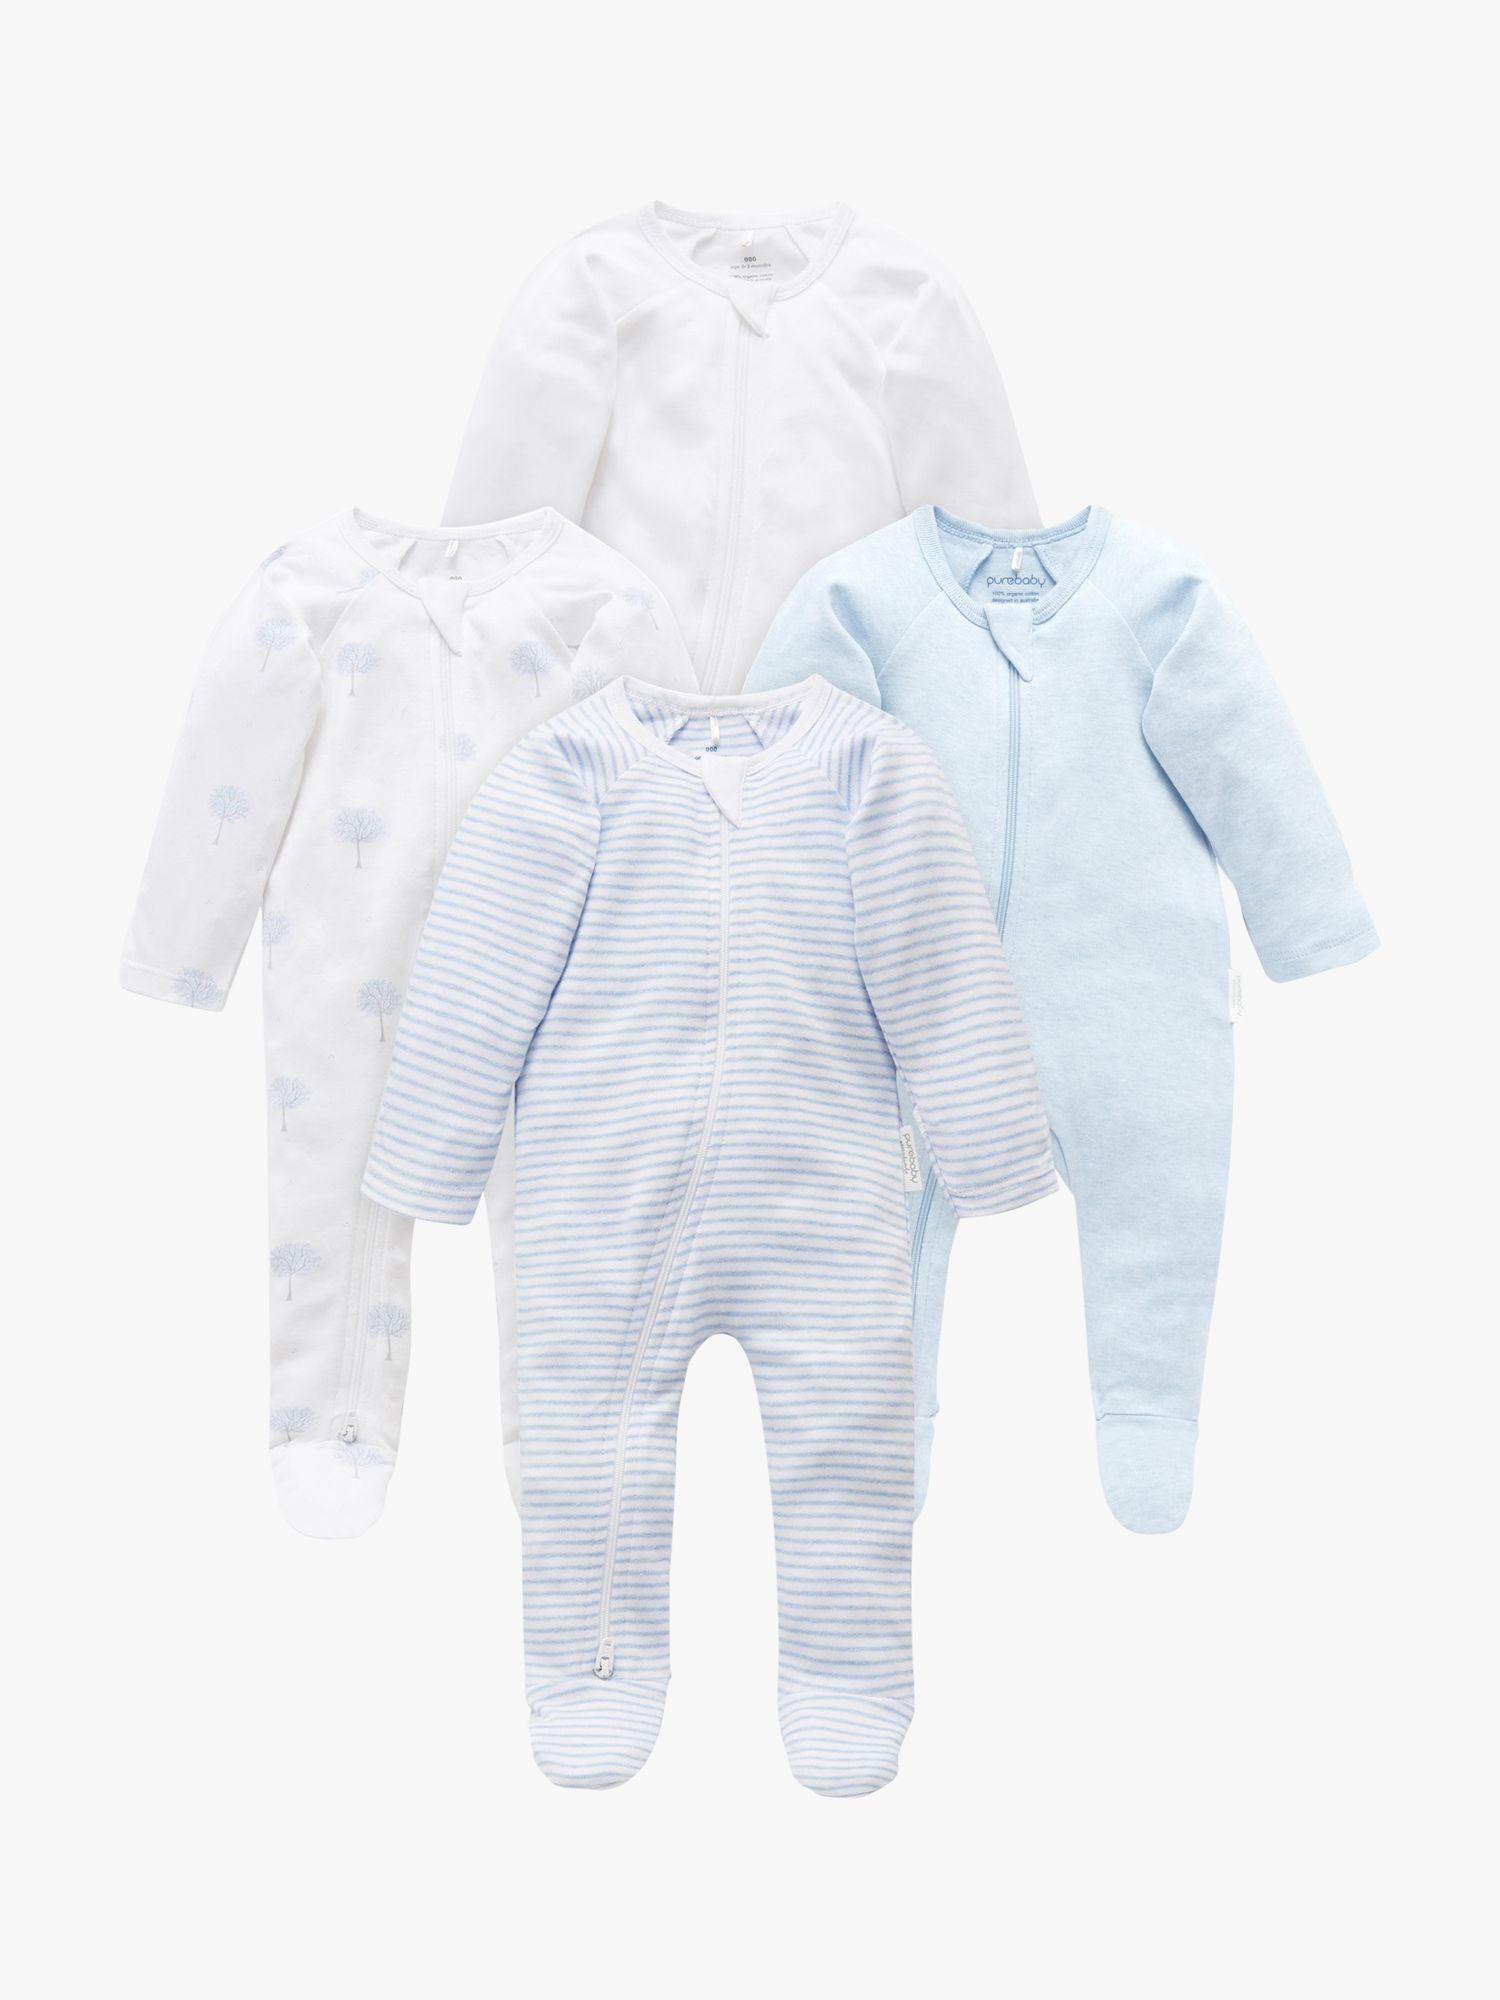 Purebaby Organic Cotton Essential Zip Front Growsuit, Pack of 4, Blue Melange, Newborn